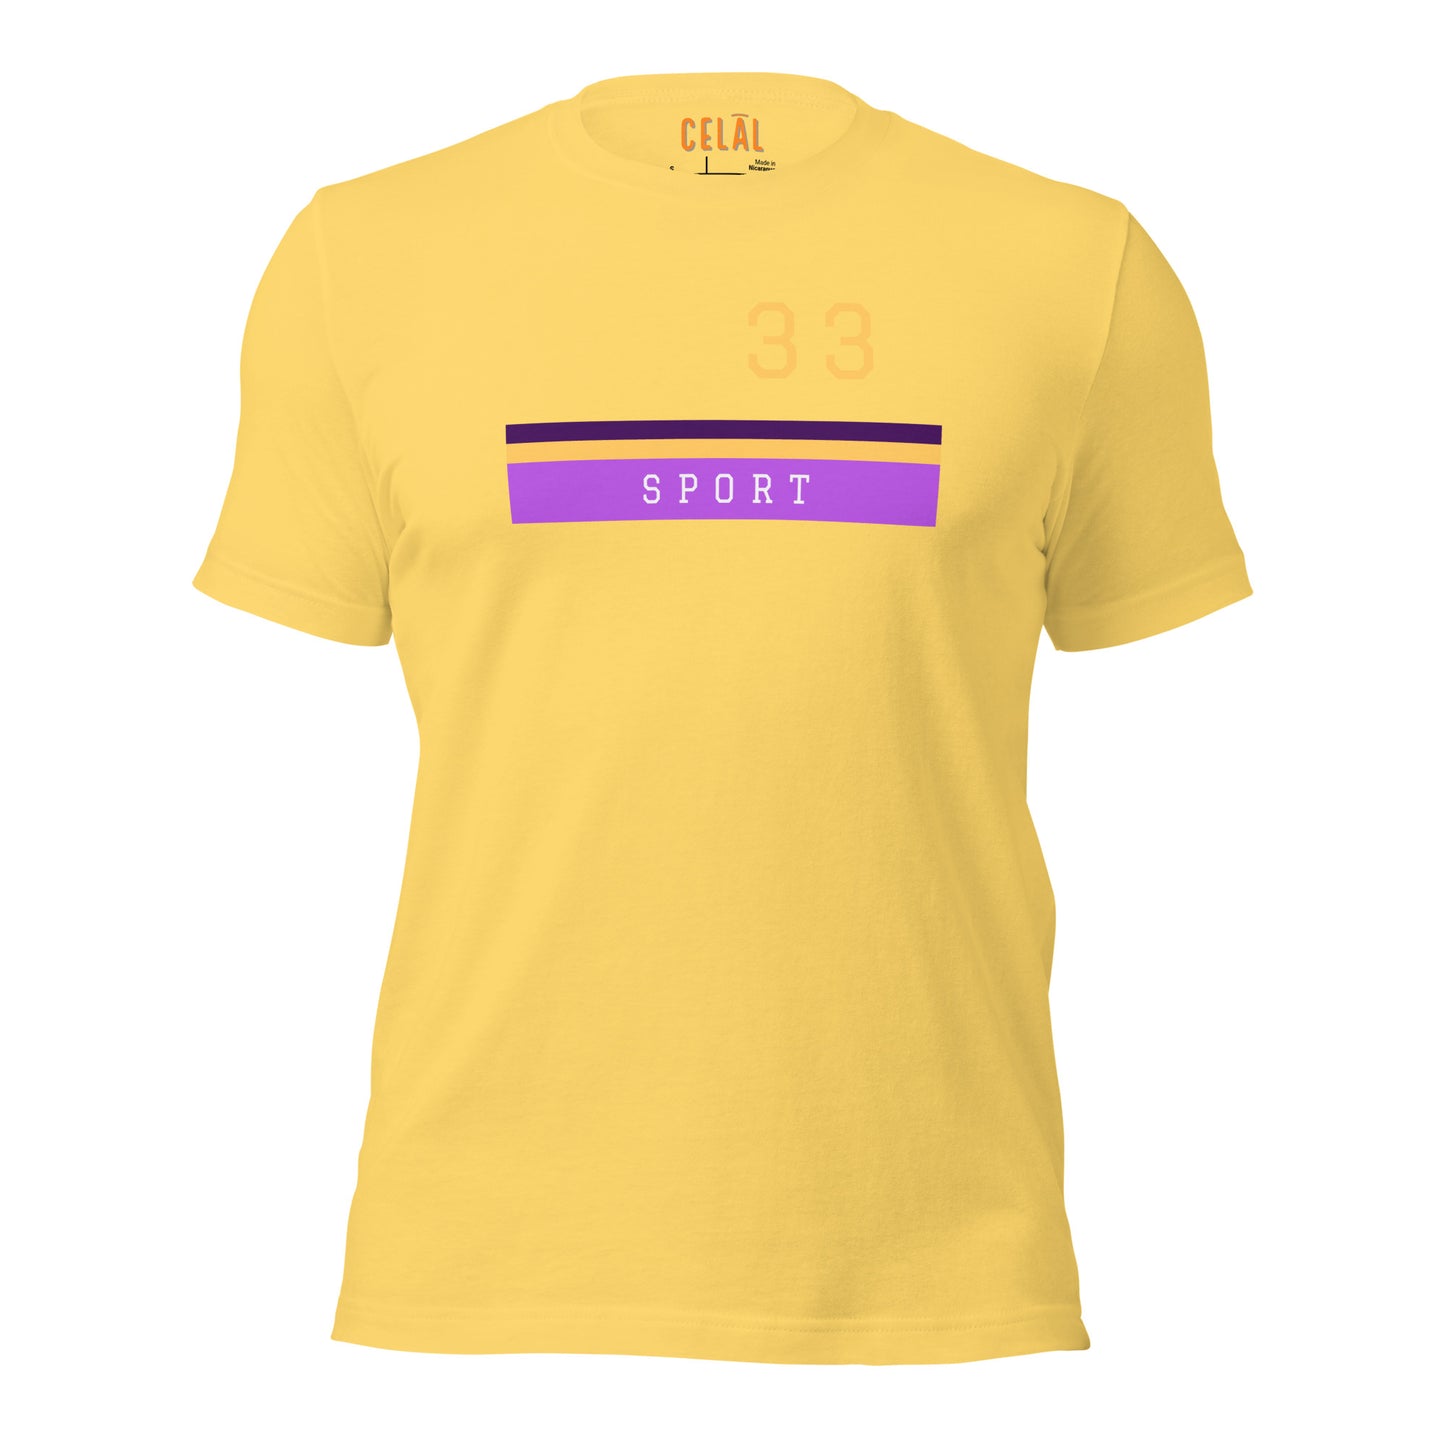 33 Unisex t-shirt